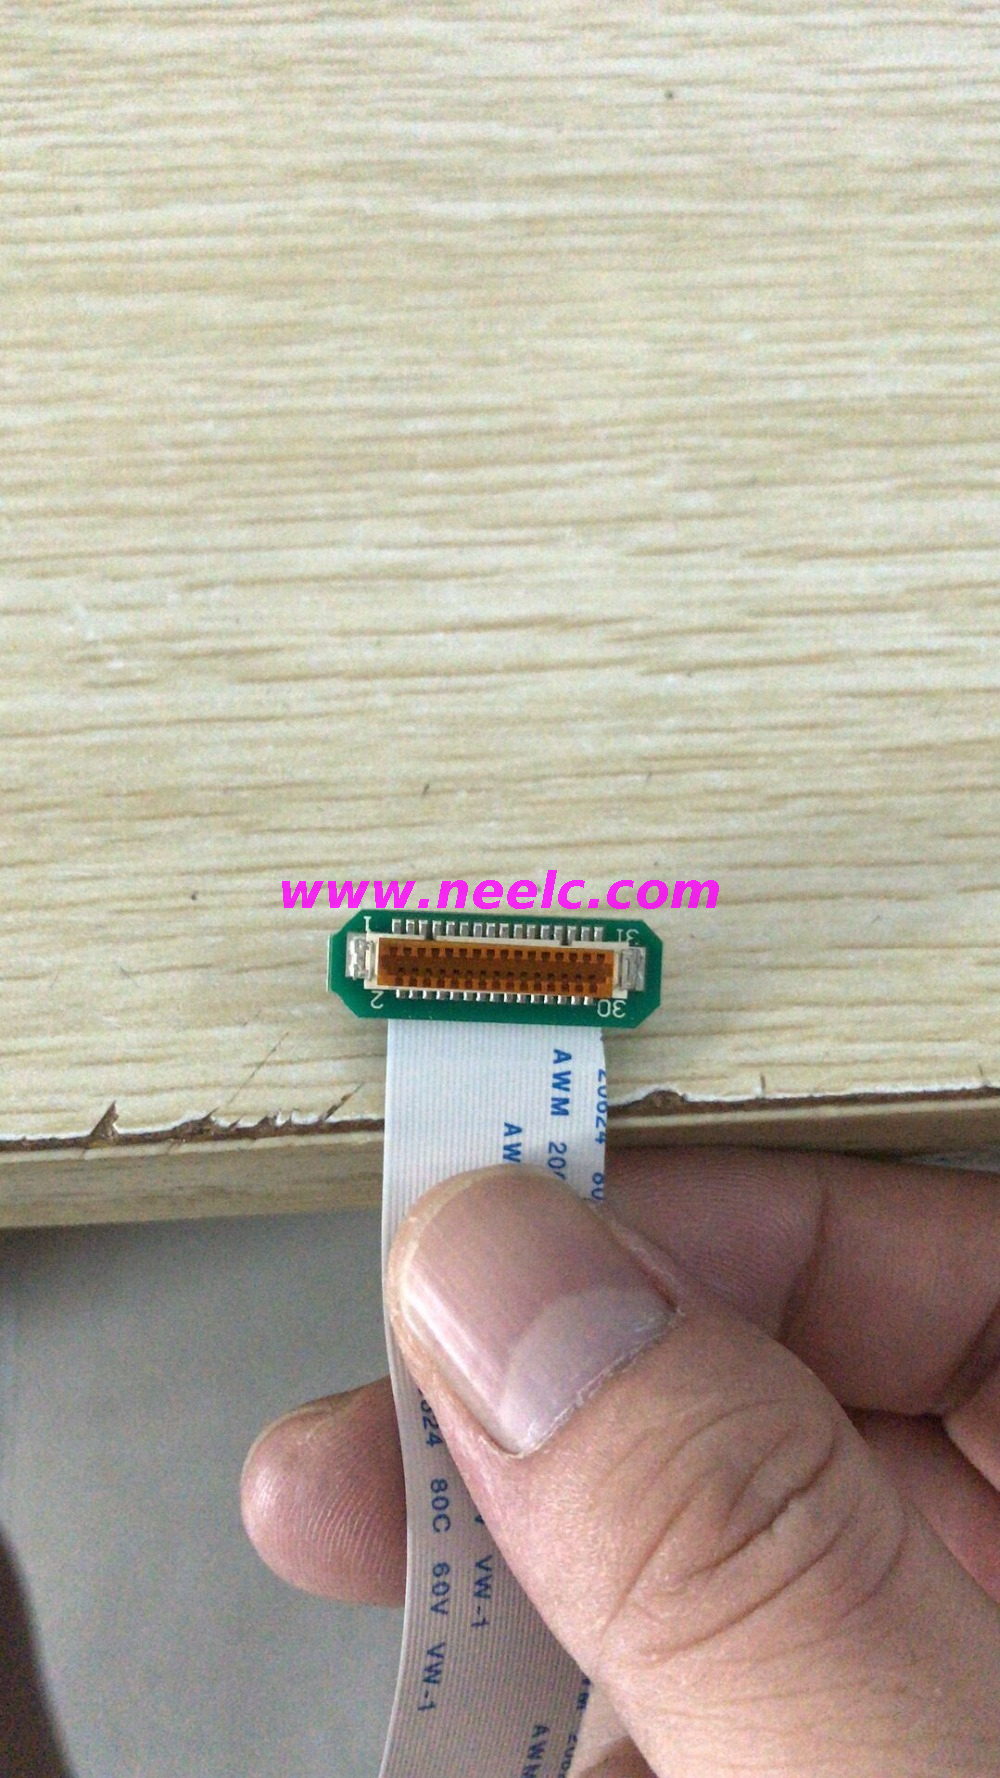 use for 6AV6643-0CD01-1AX1 HMI flat Cable